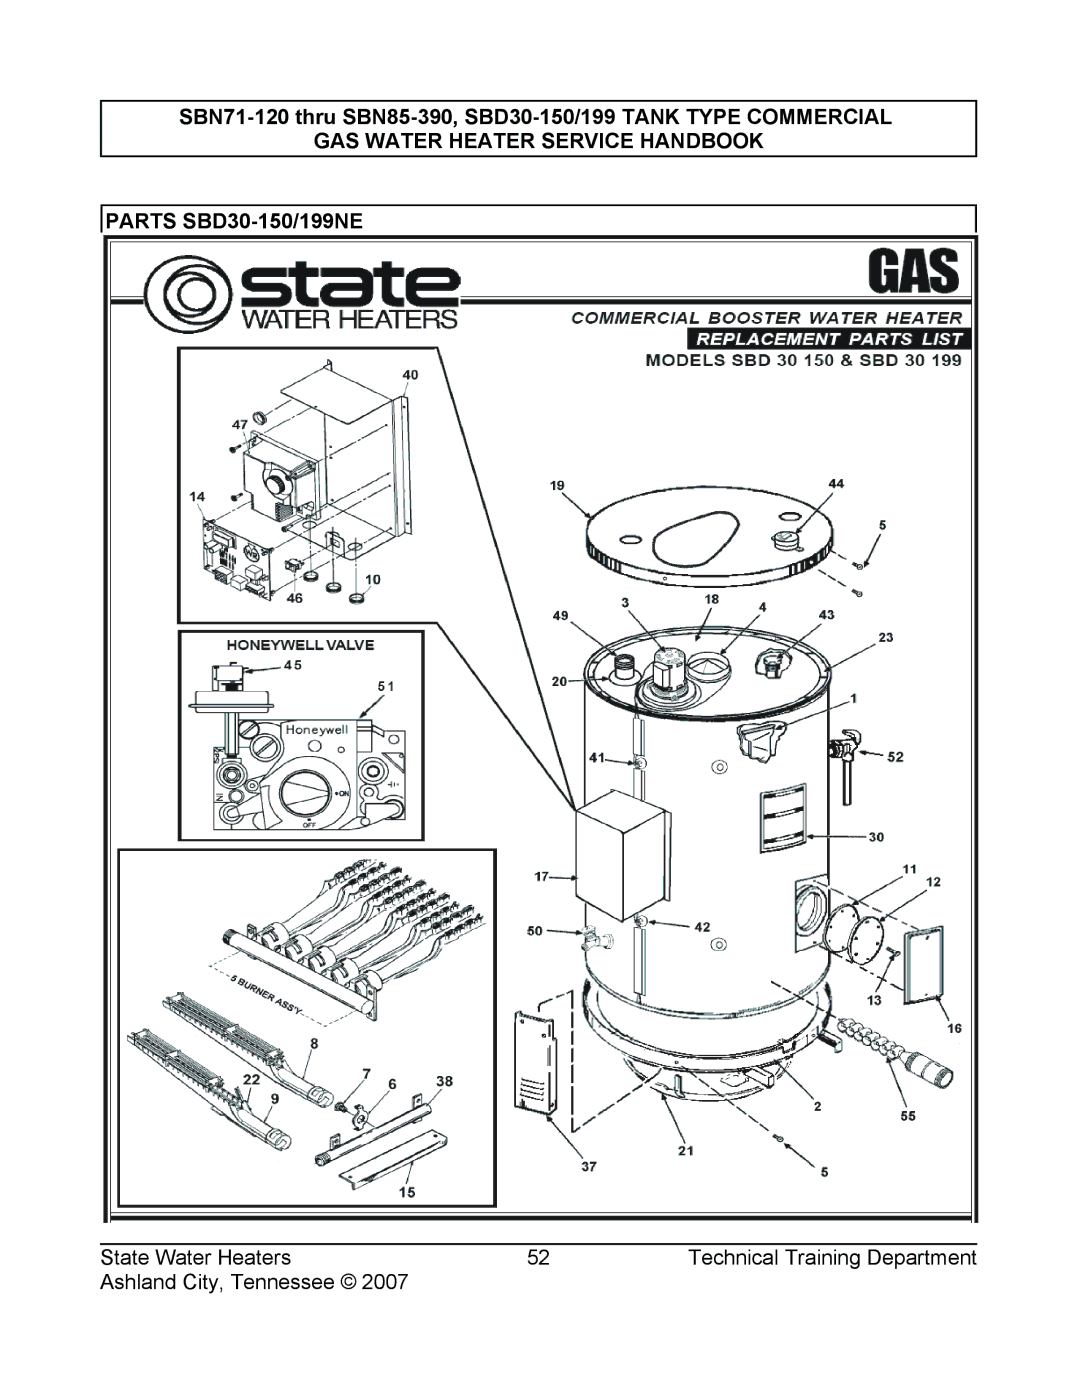 State Industries SBD30 199, SBD30 150, SBN85 390 (A), SBN71 120, SERIES 108 manual Parts SBD30-150/199NE 